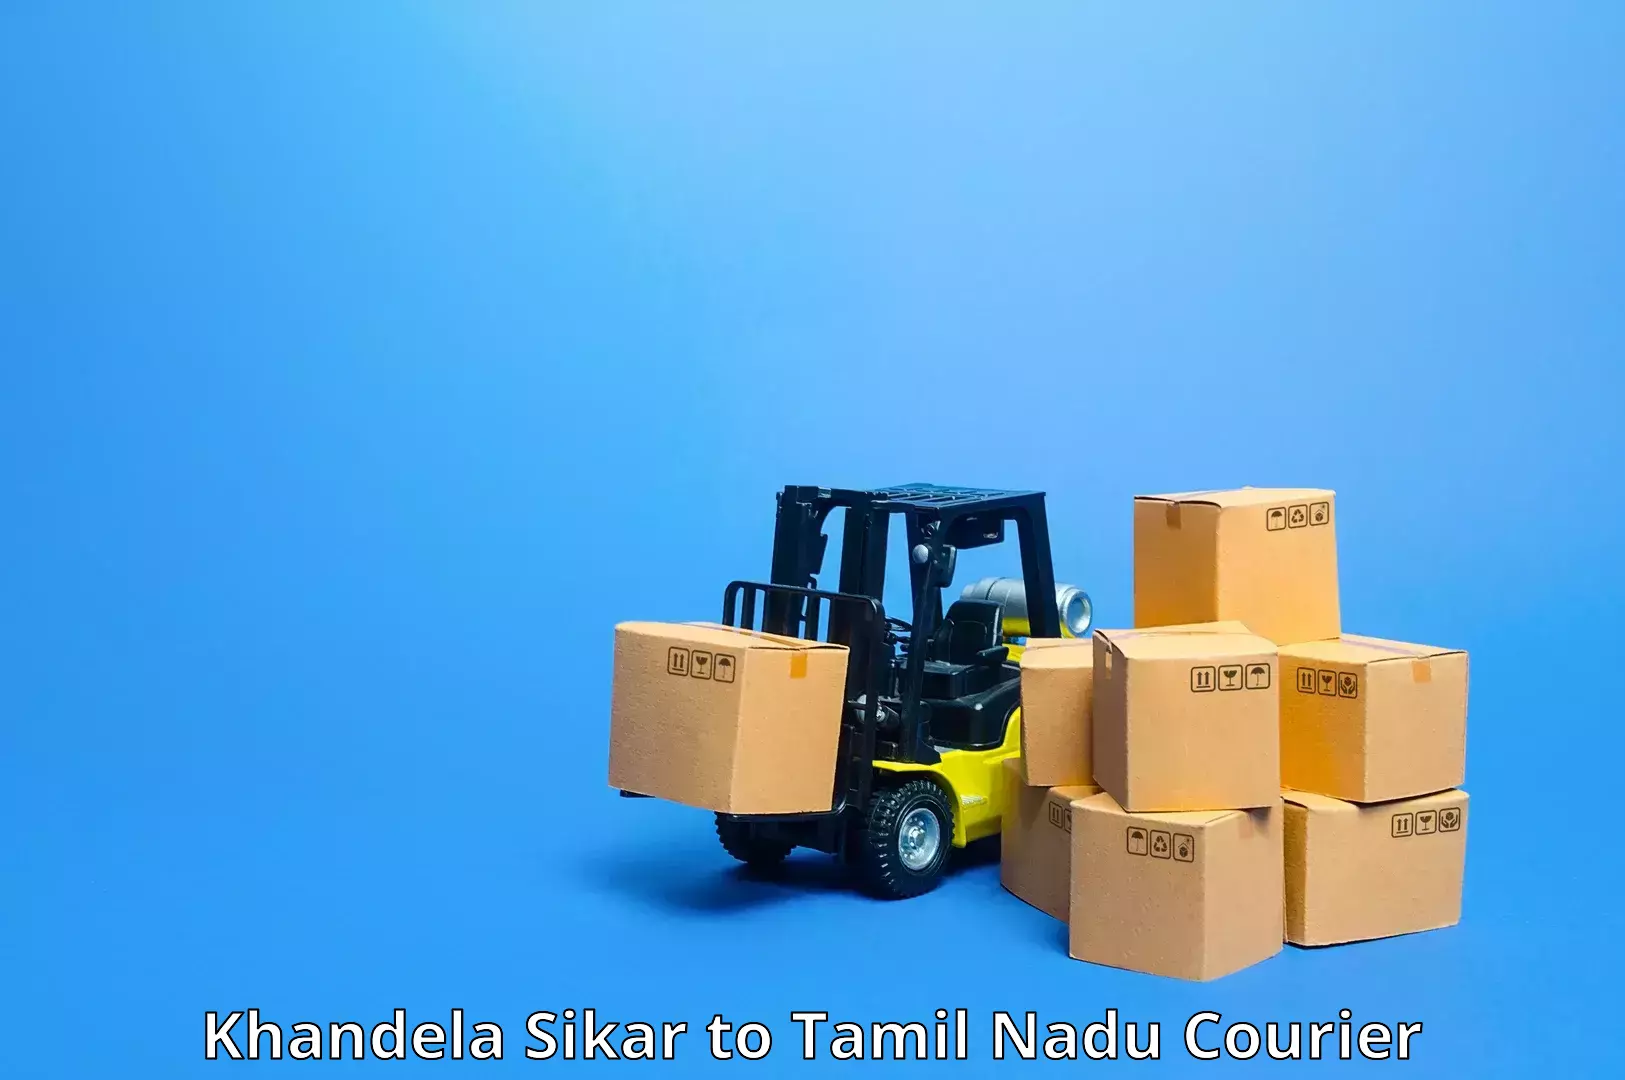 Reliable logistics providers Khandela Sikar to Virudhunagar